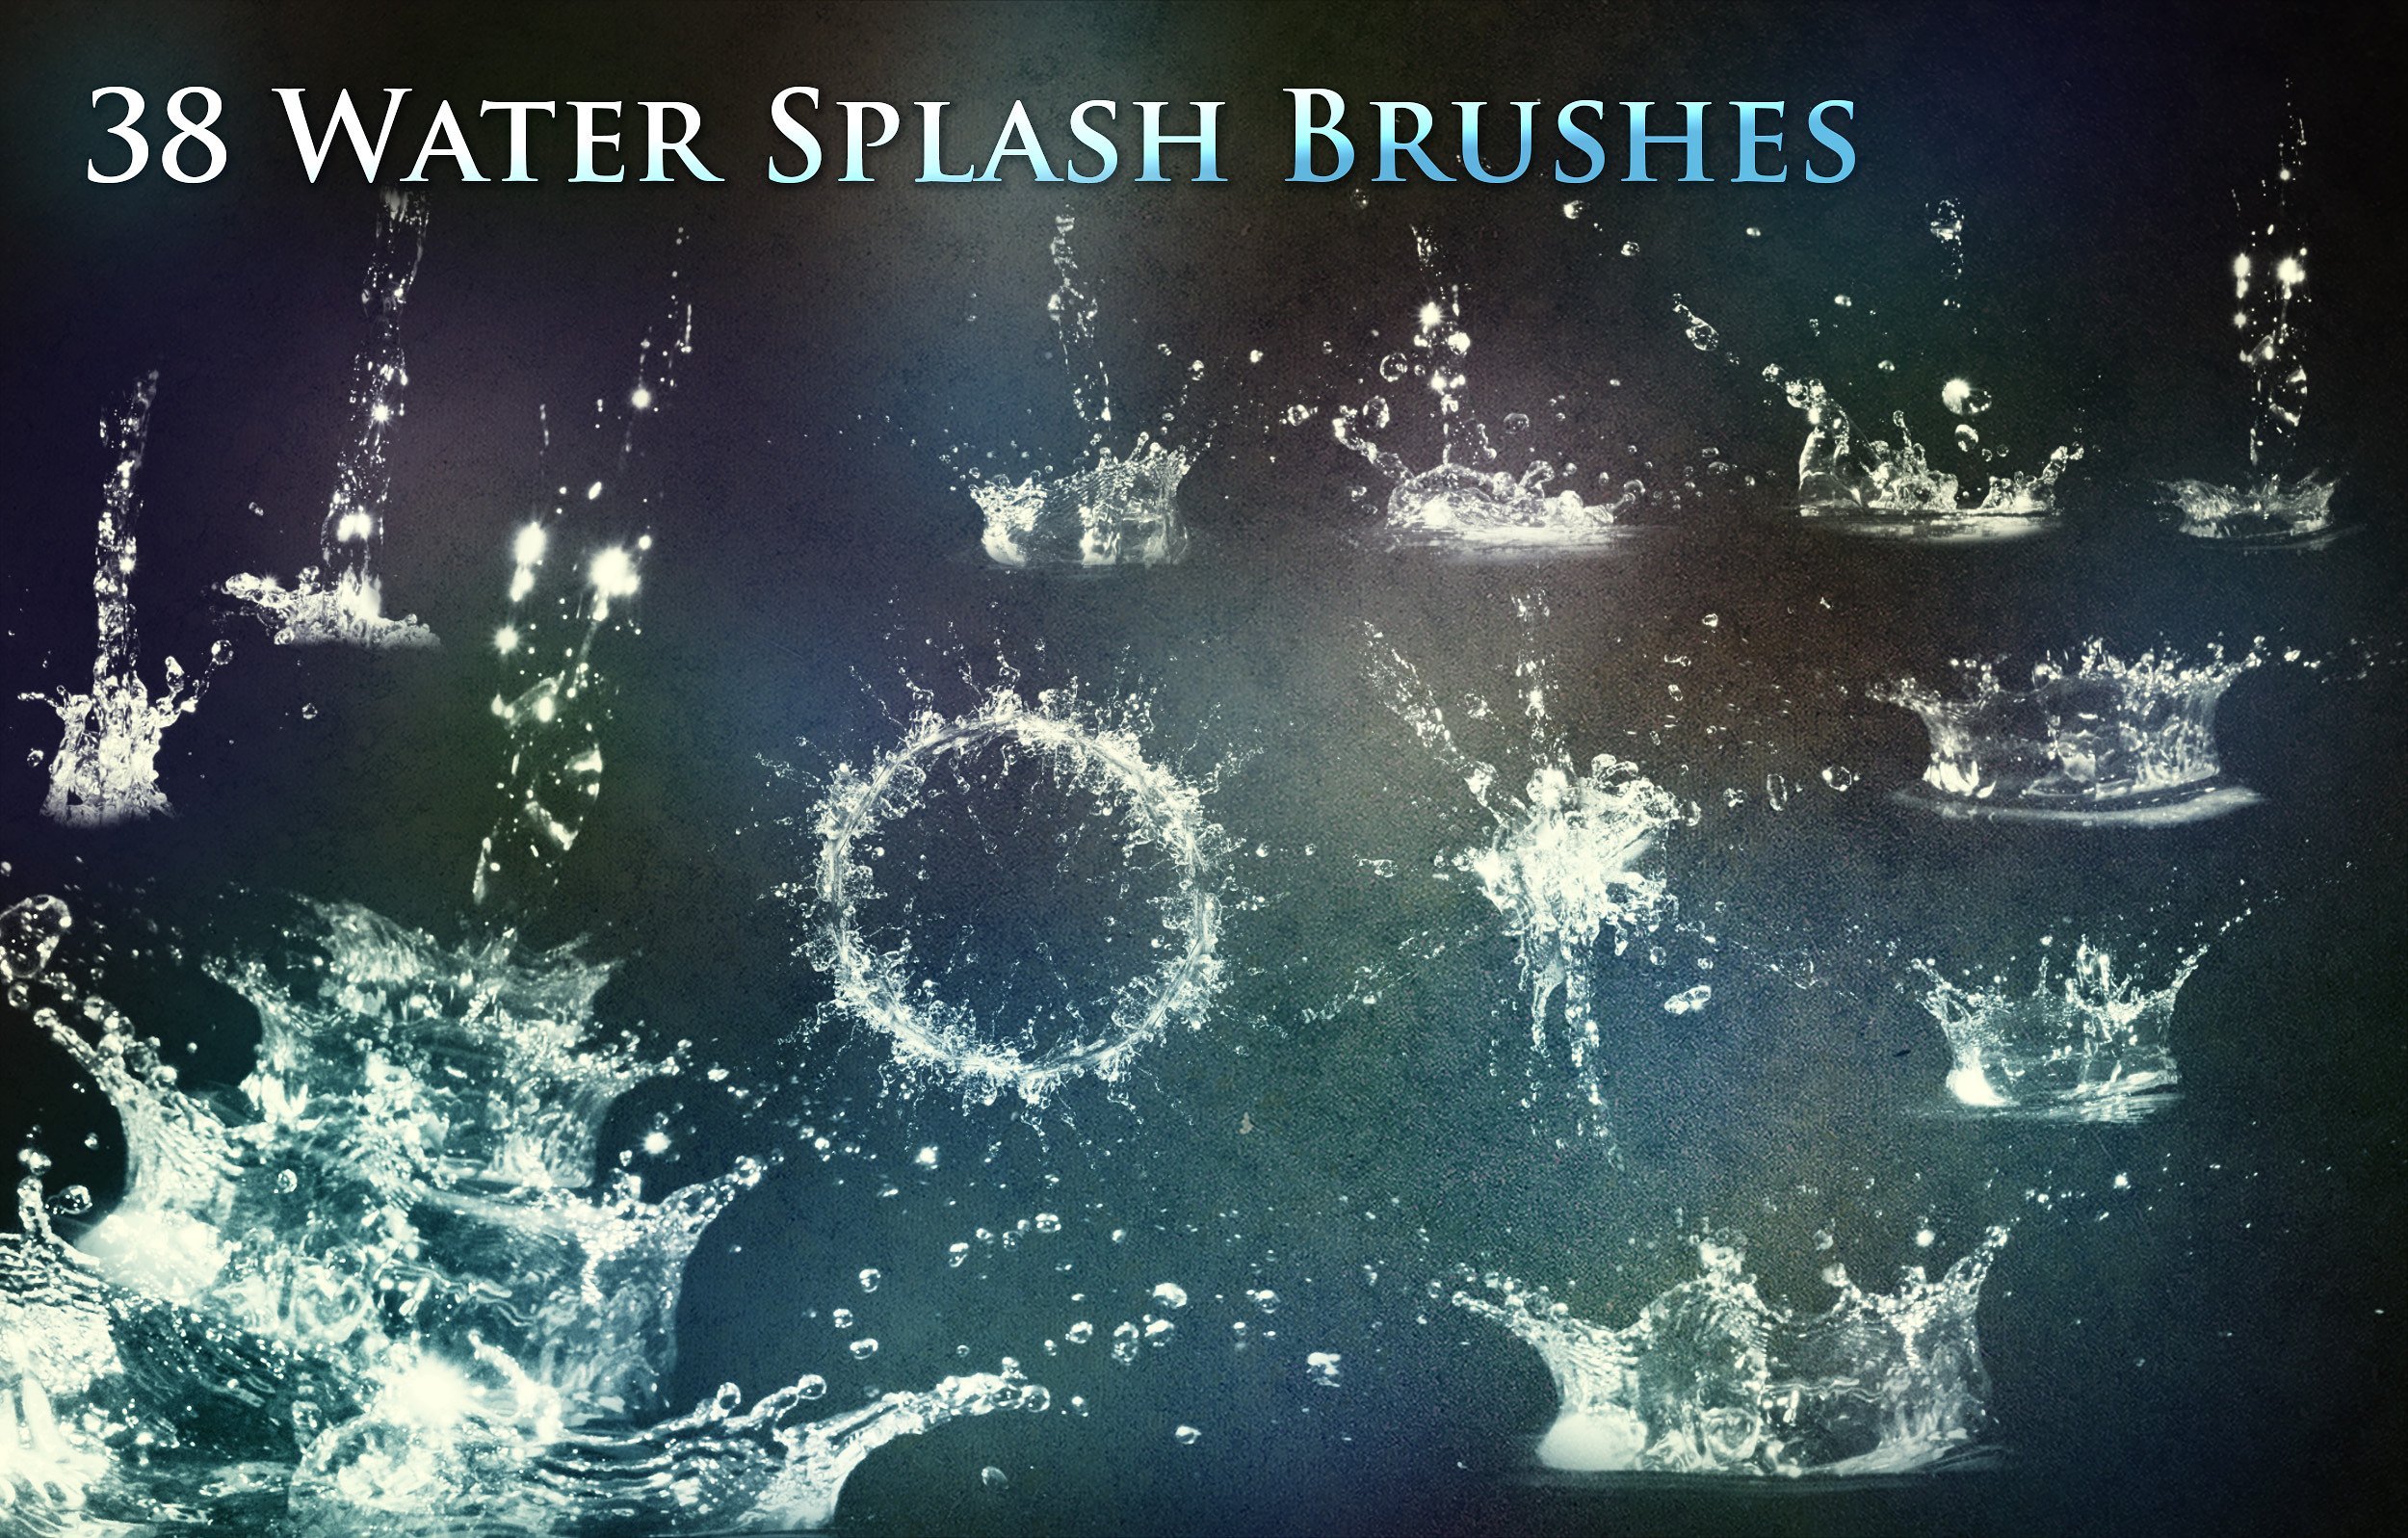 38 water splash brushes.